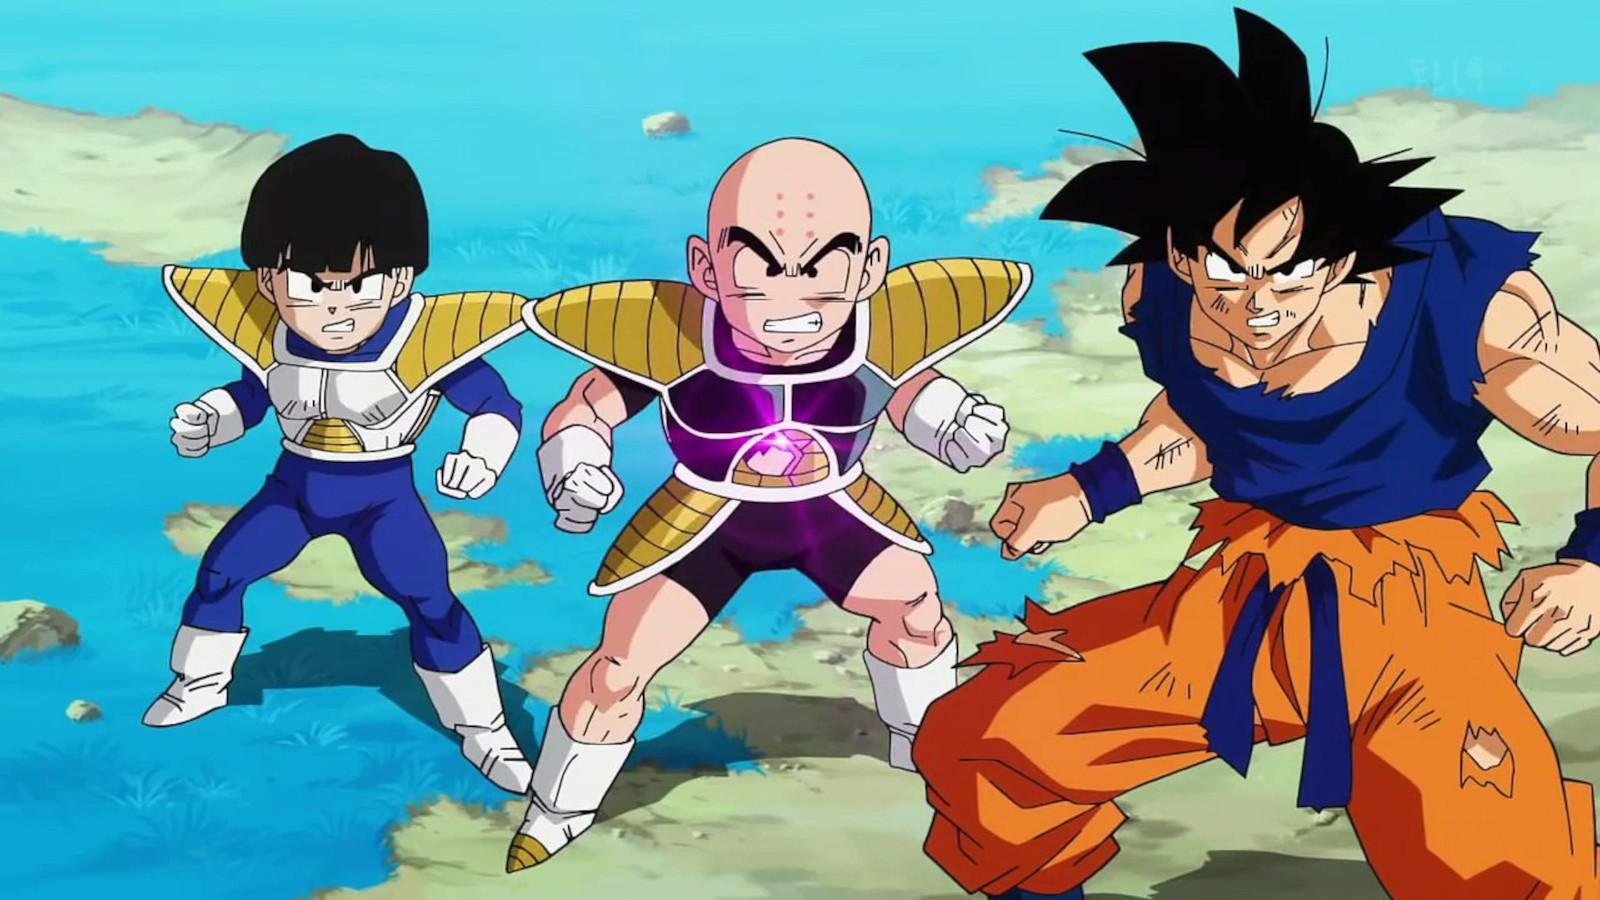 Goku, Krillin, and Gohan in Dragon Ball Z